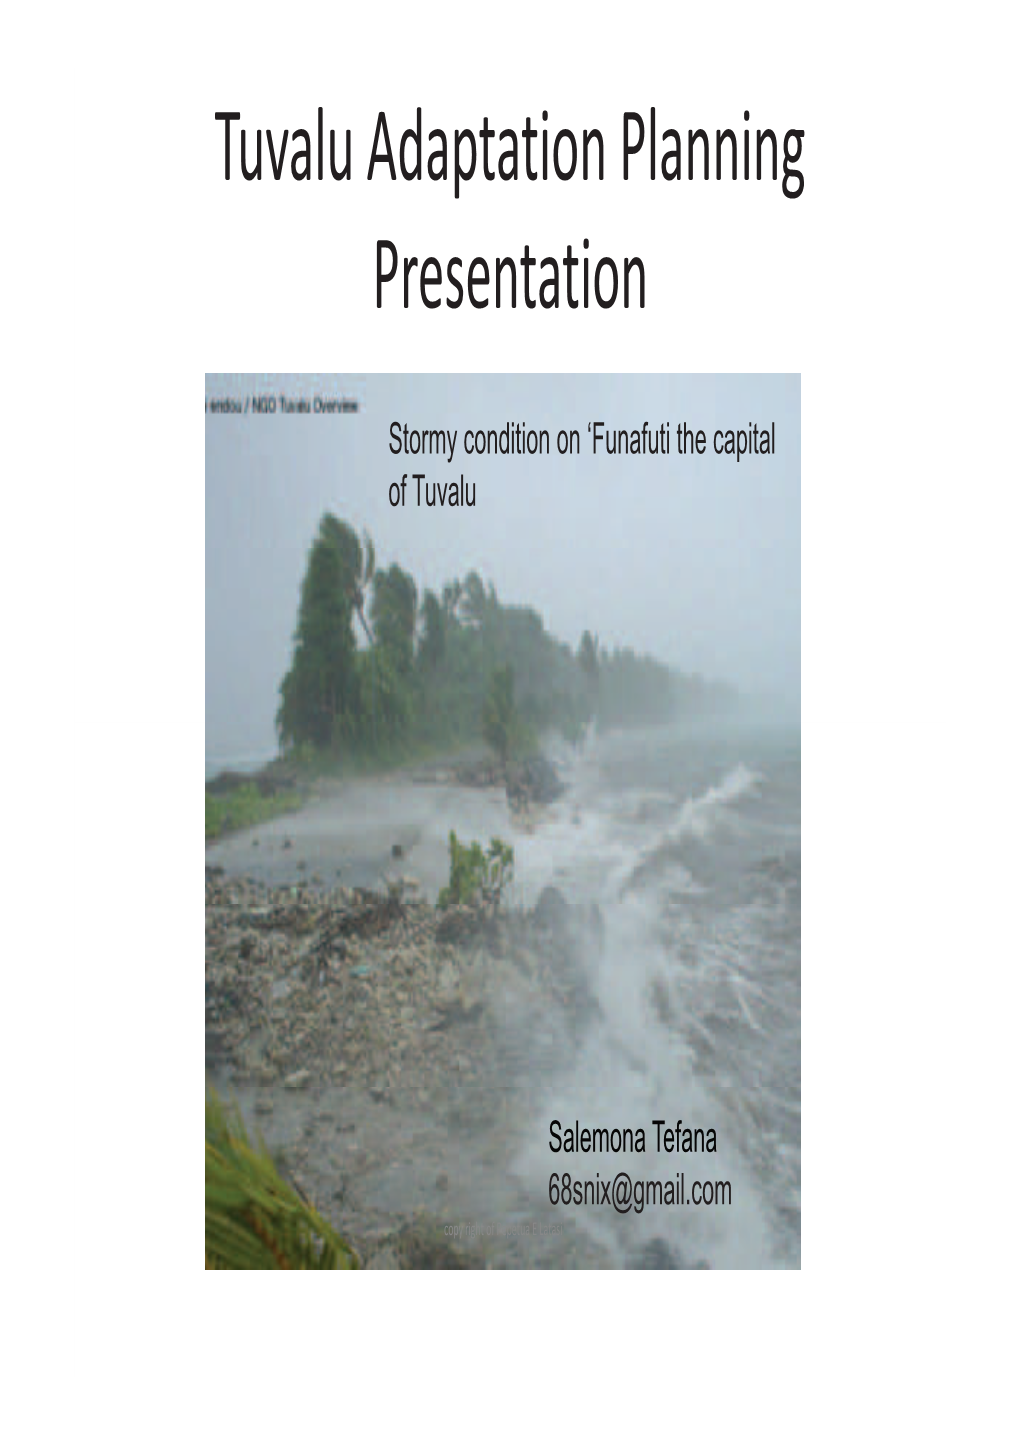 Tuvalu Adaptation Planning Presentation